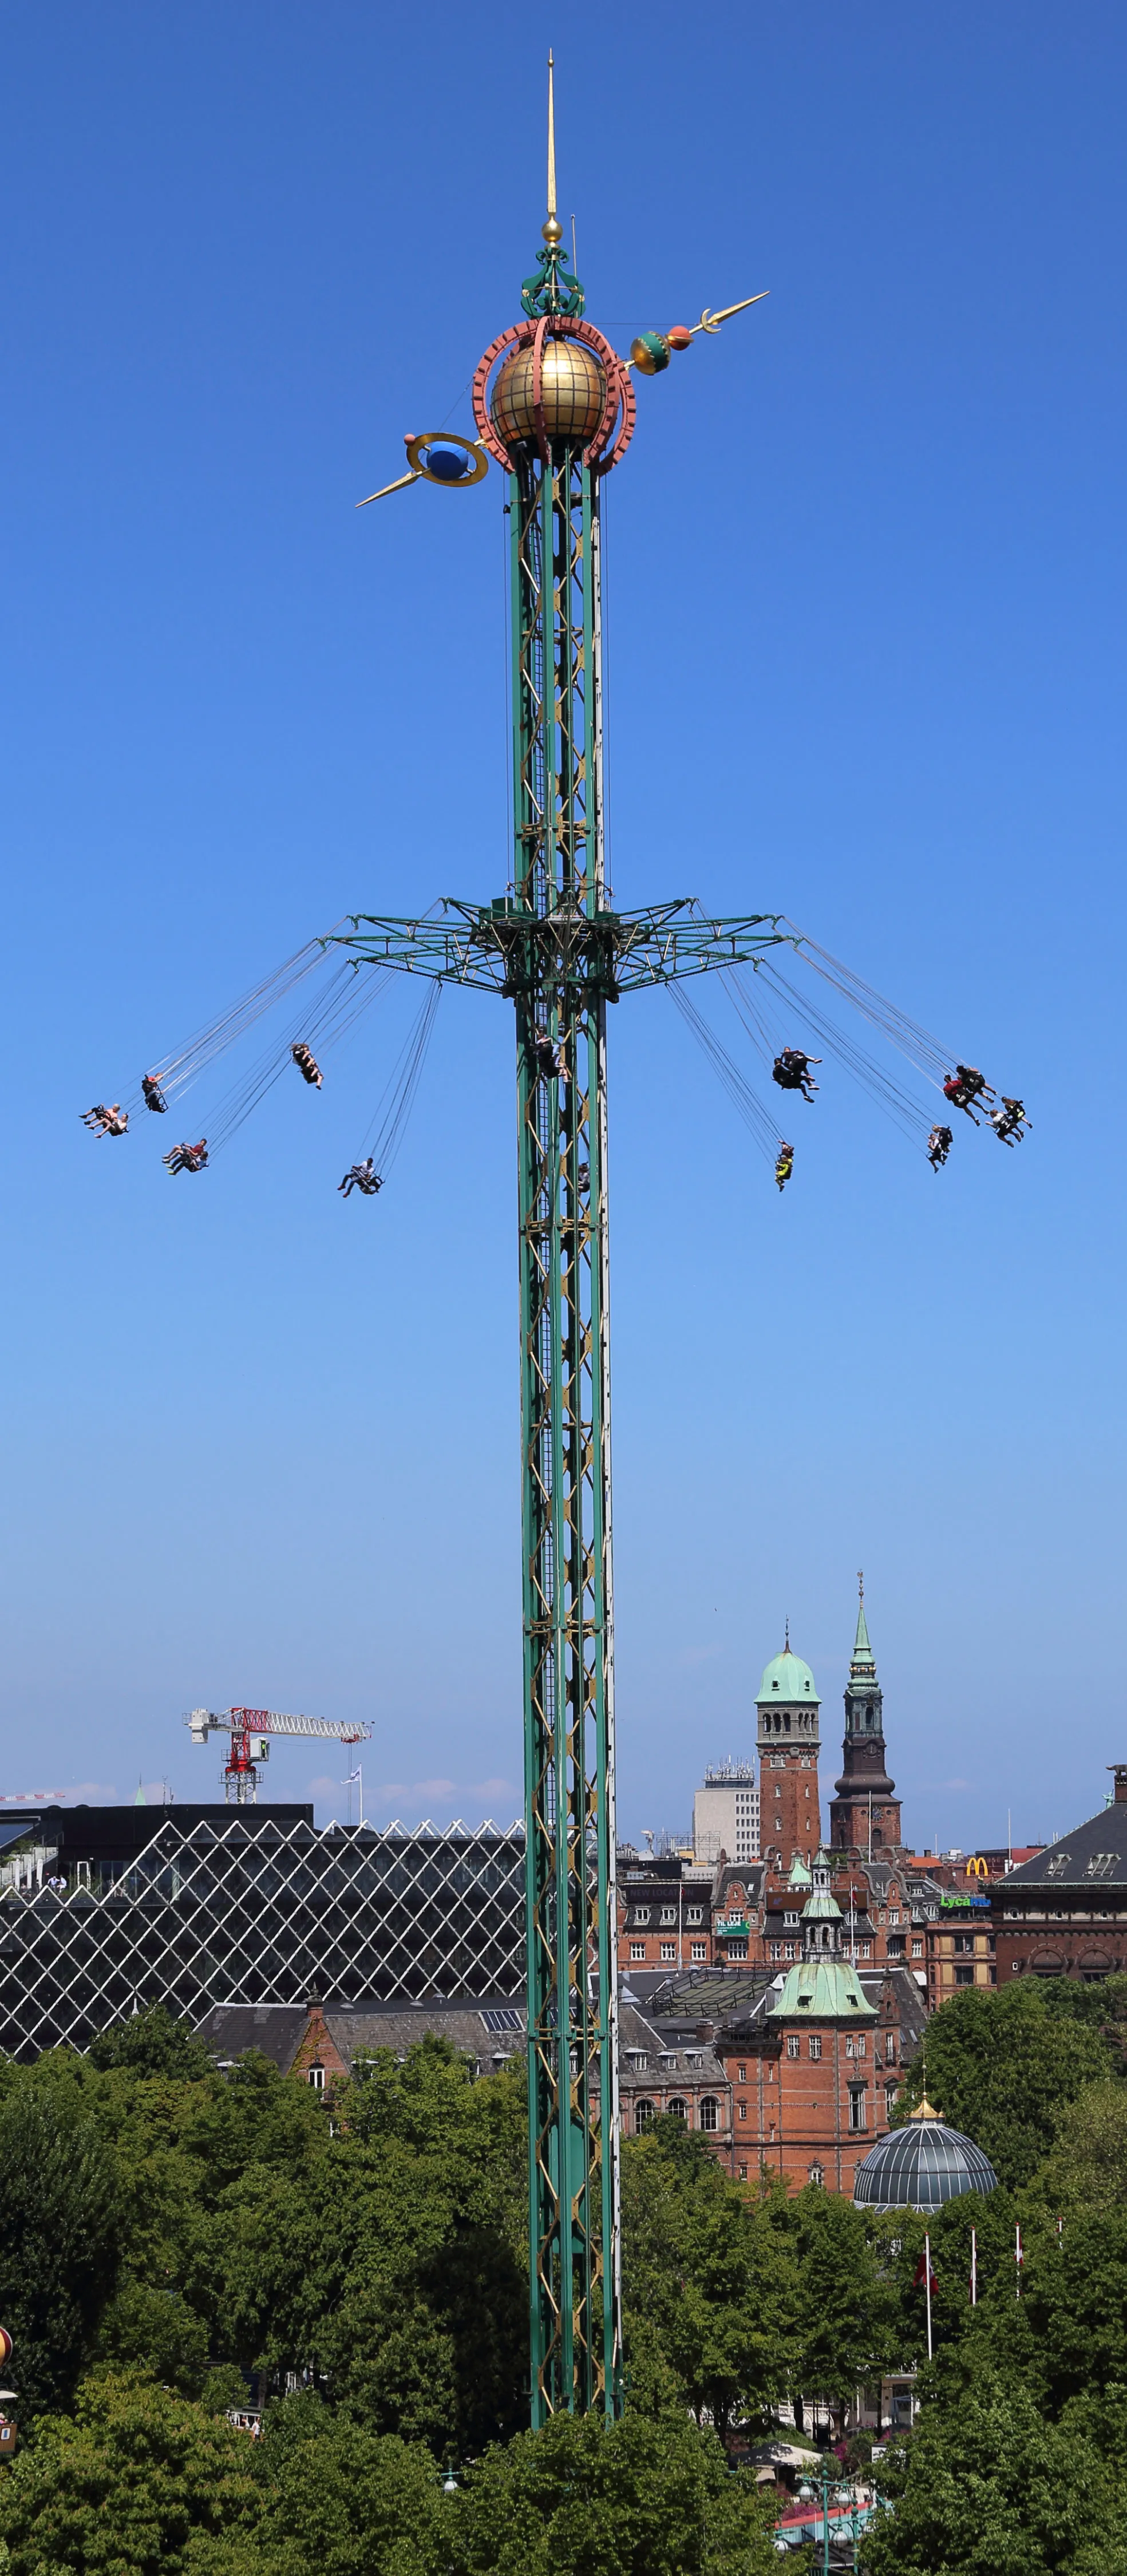 Photo showing: The Himmelskibet ride in Tivoli Gardens, Copenhagen, Denmark.